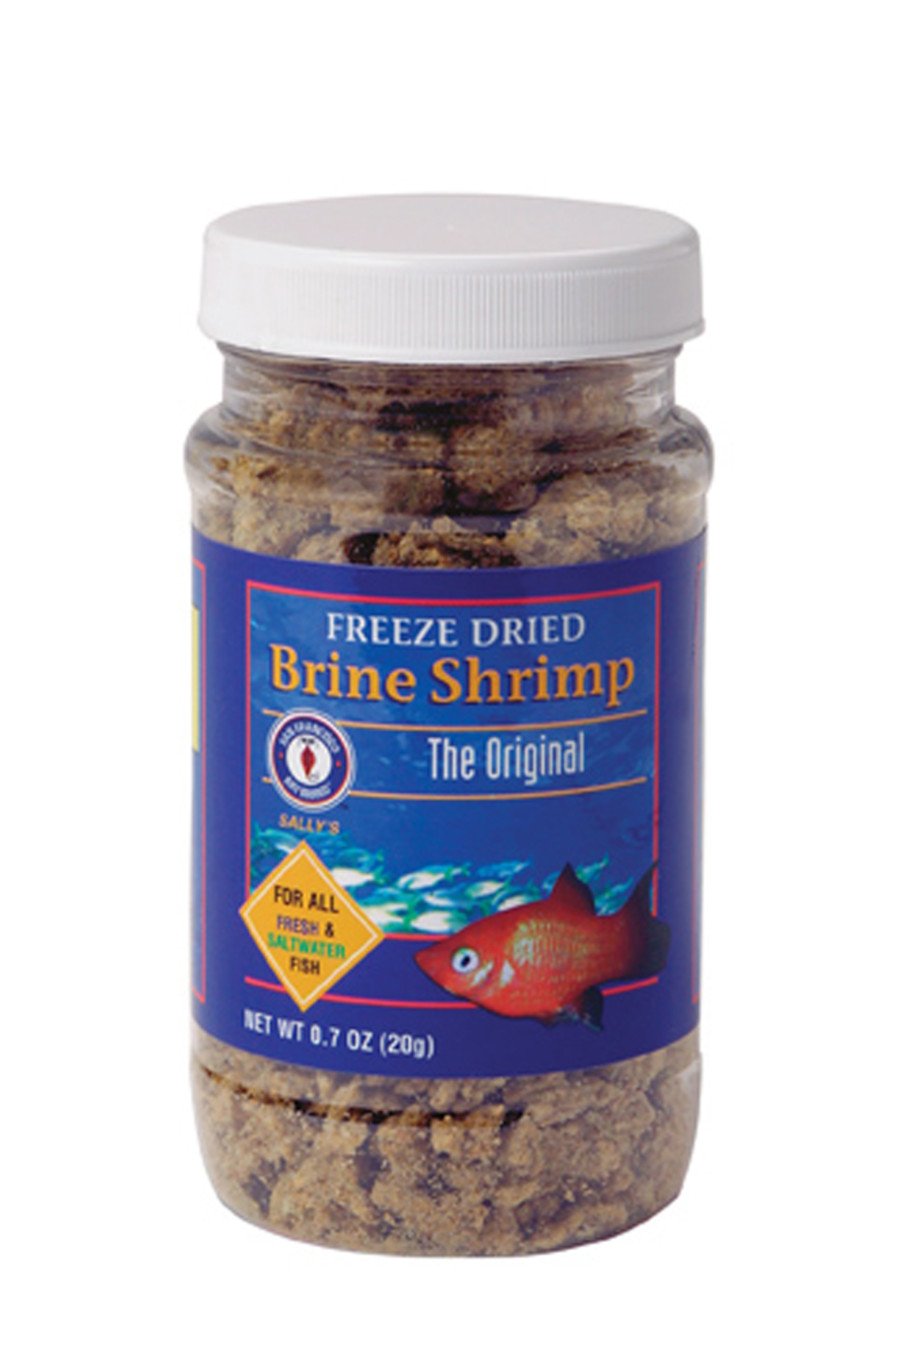 San Francisco Bay Brine Shrimp Freeze Dried Fish Food, 0.7-oz